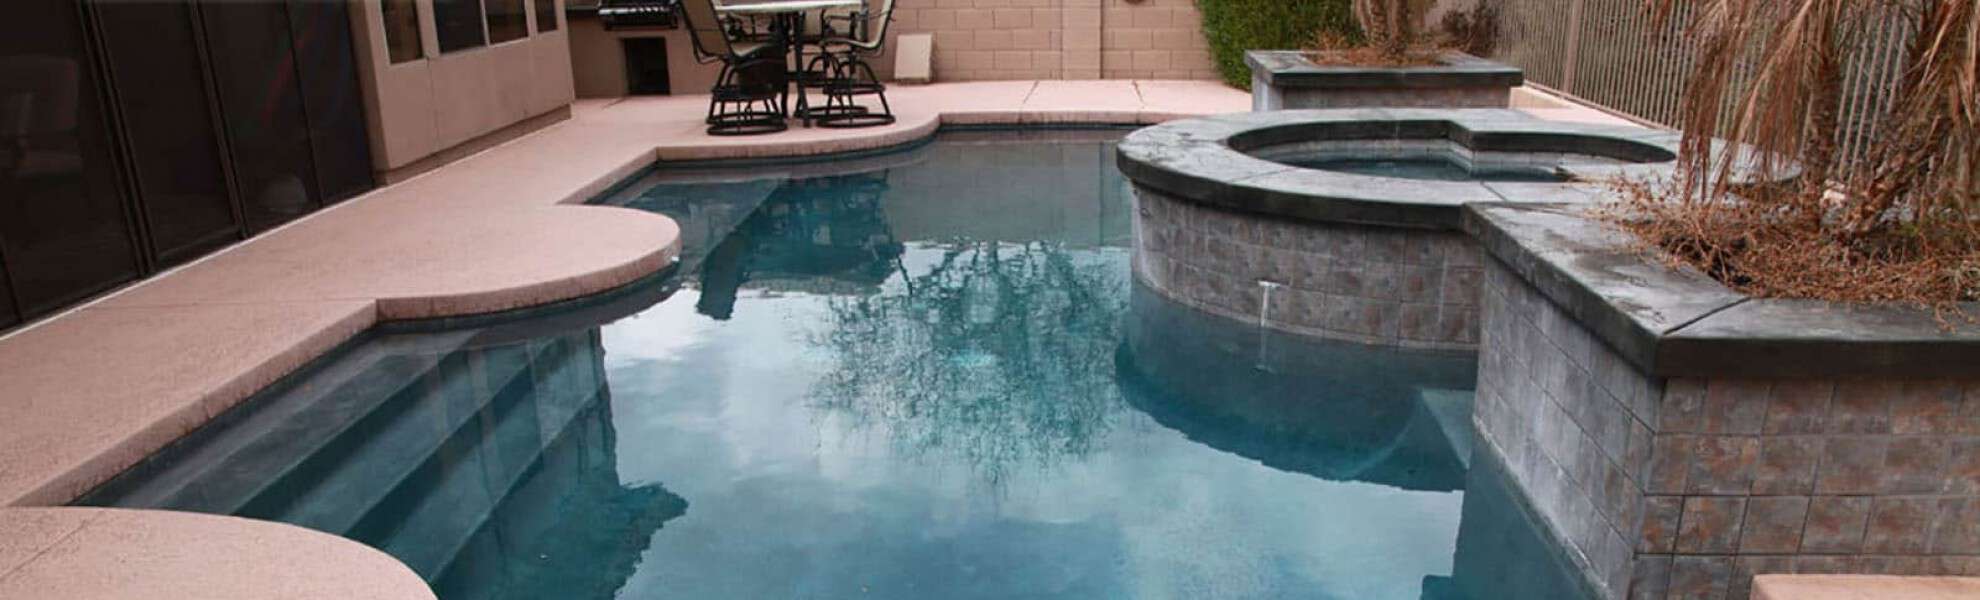 Alfonsi Swimming Pool Remodel | Before Photo | Shasta Pools & Spas